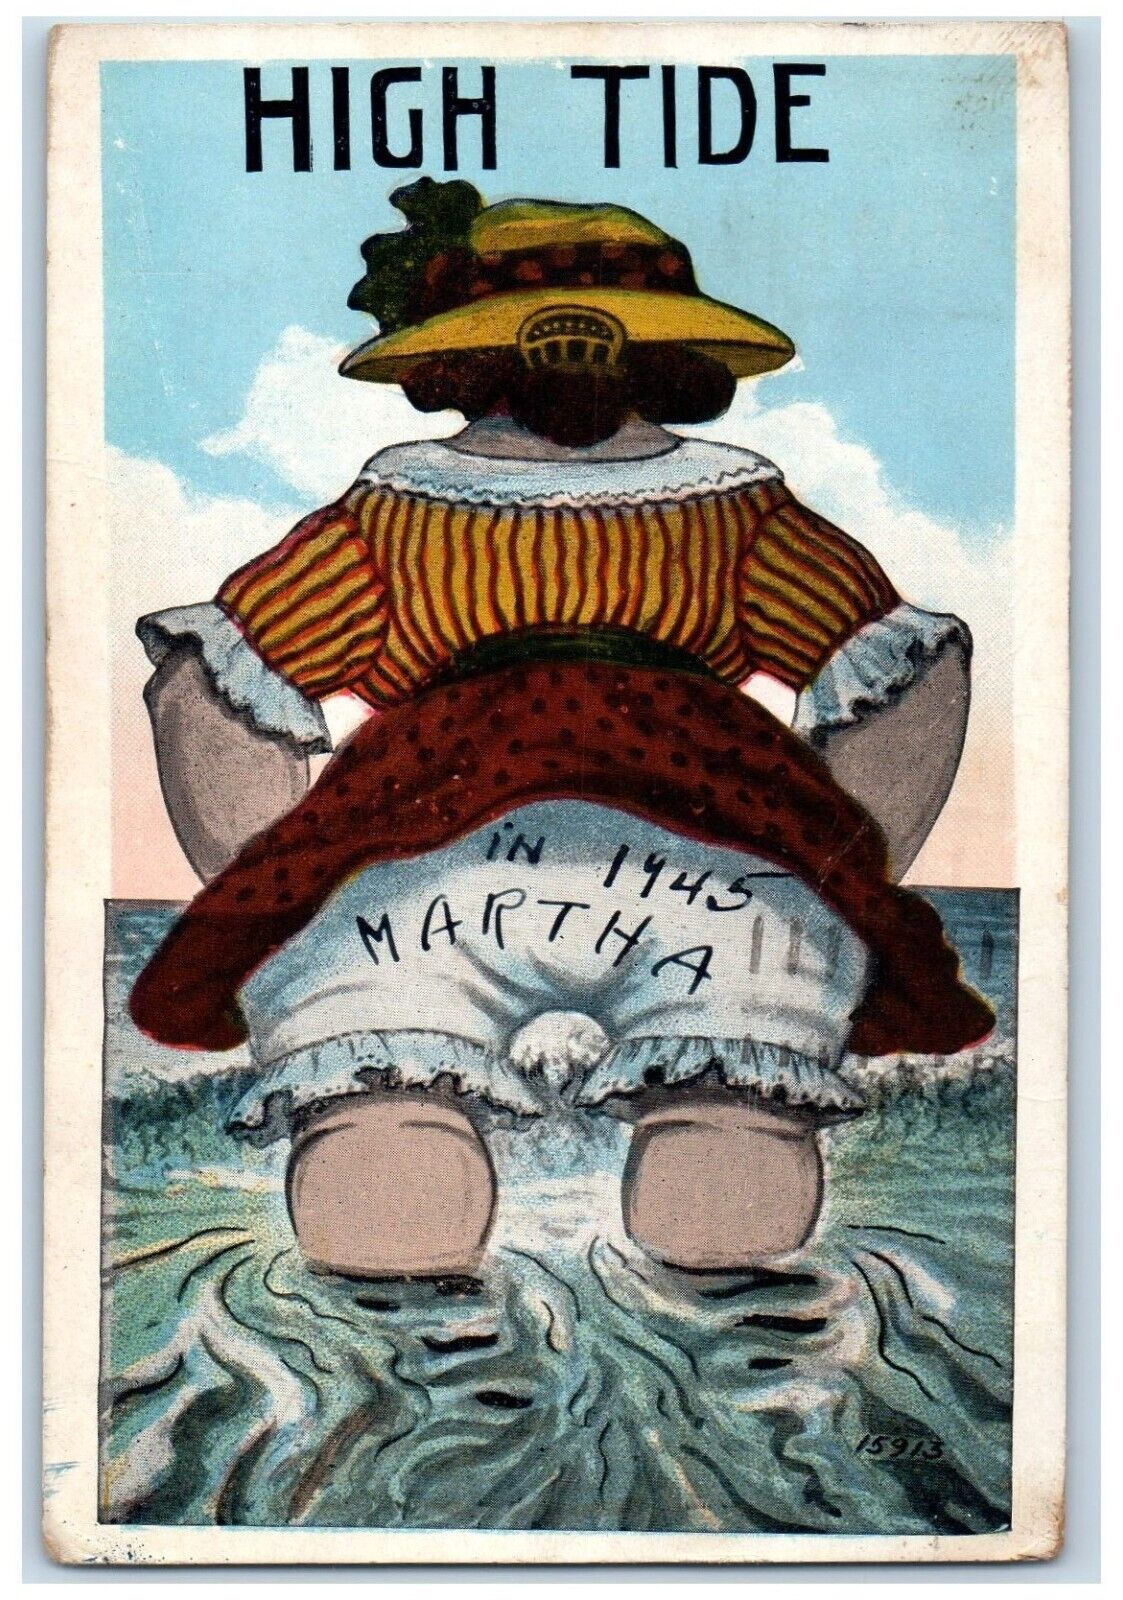 1935 High Tide Giant Woman Boston Massachusetts MA Posted Vintage Postcard